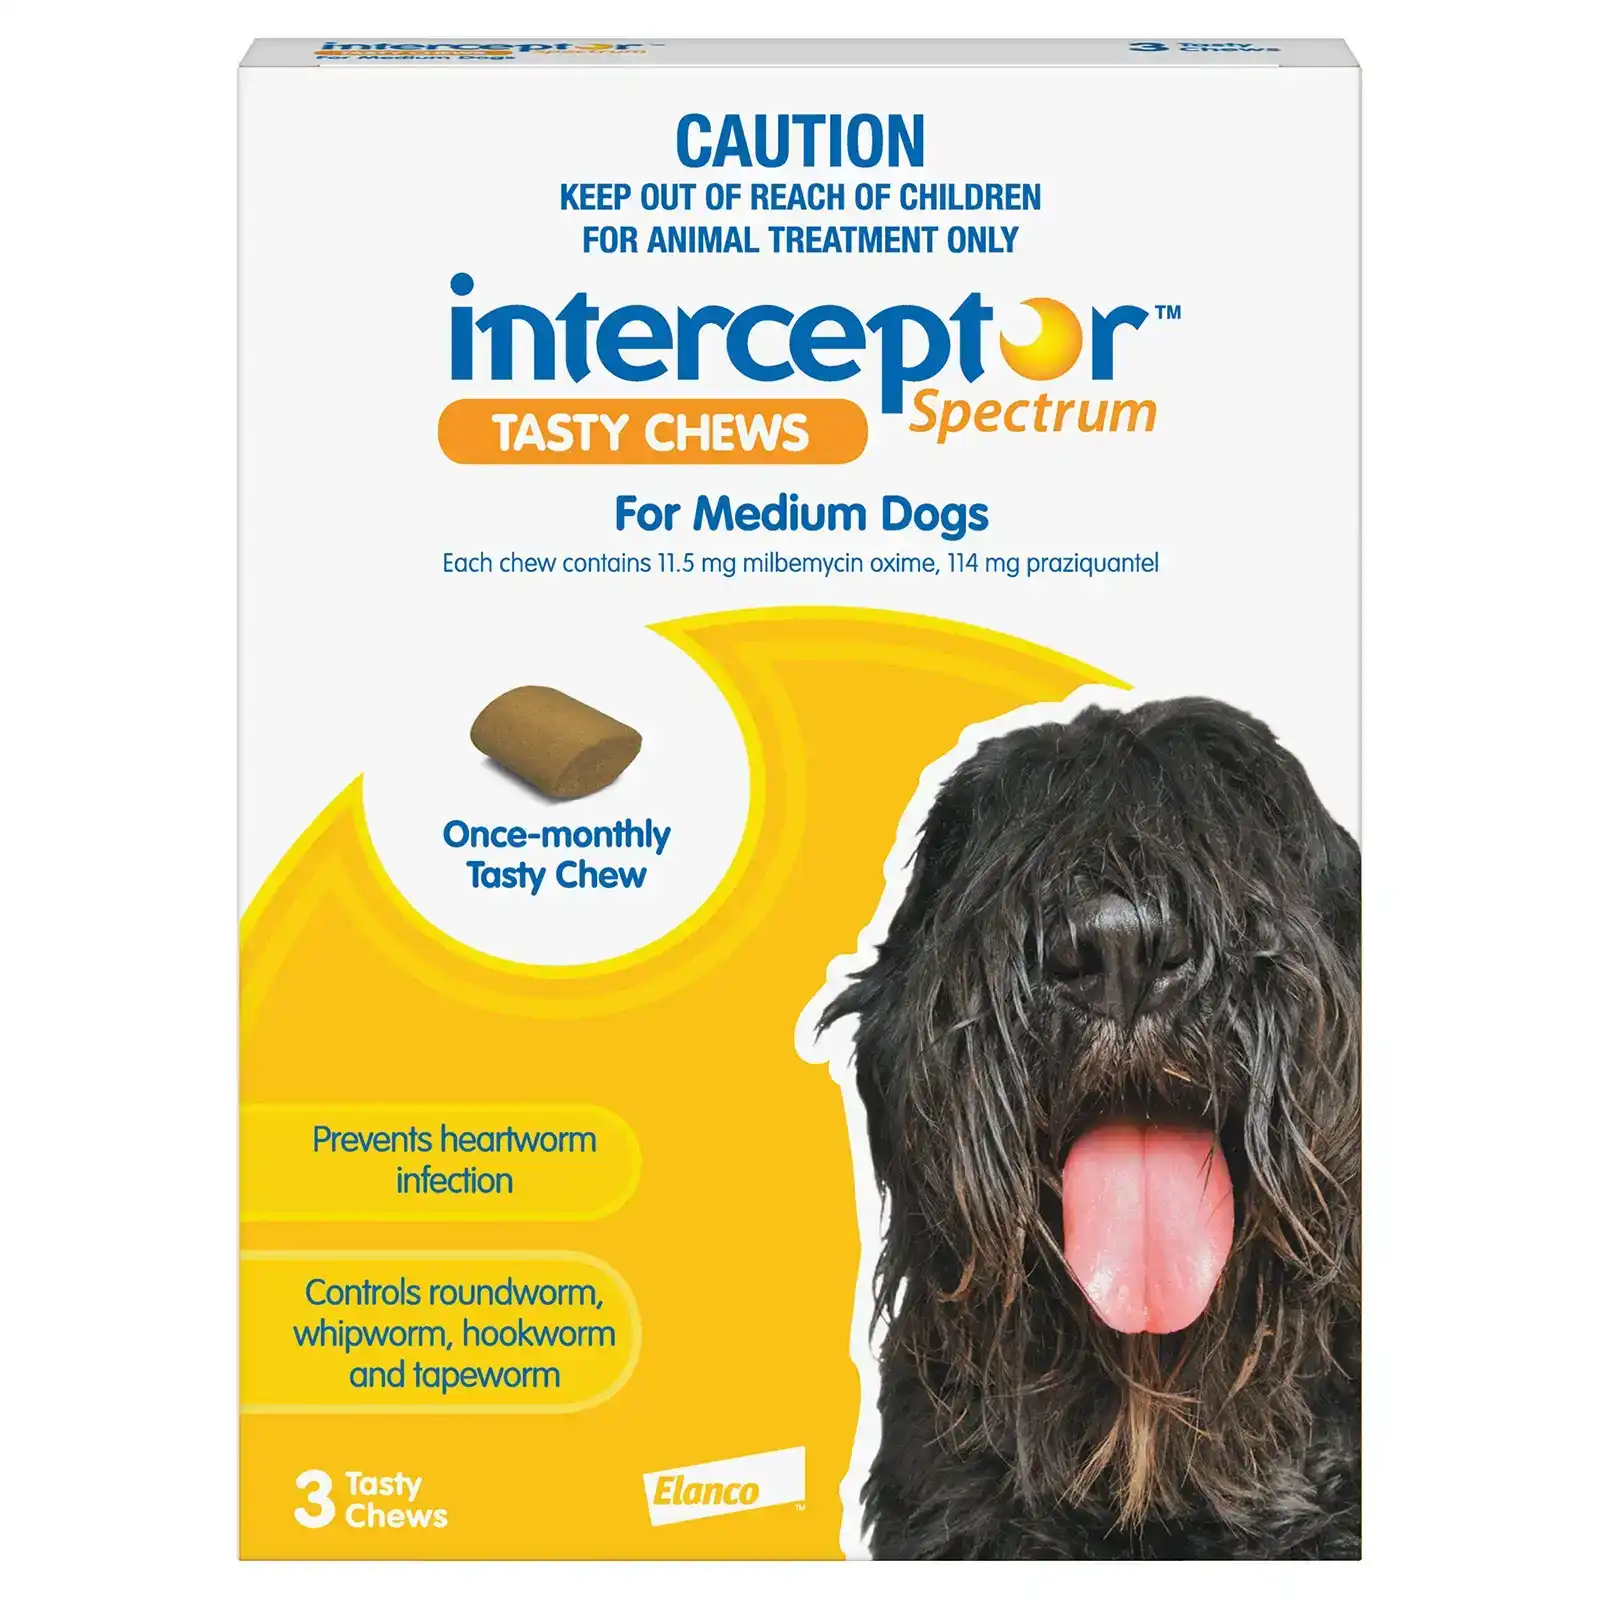 Interceptor Spectrum Tasty Chews For Medium Dogs 11 To 22Kg (Yellow) 3 Chews